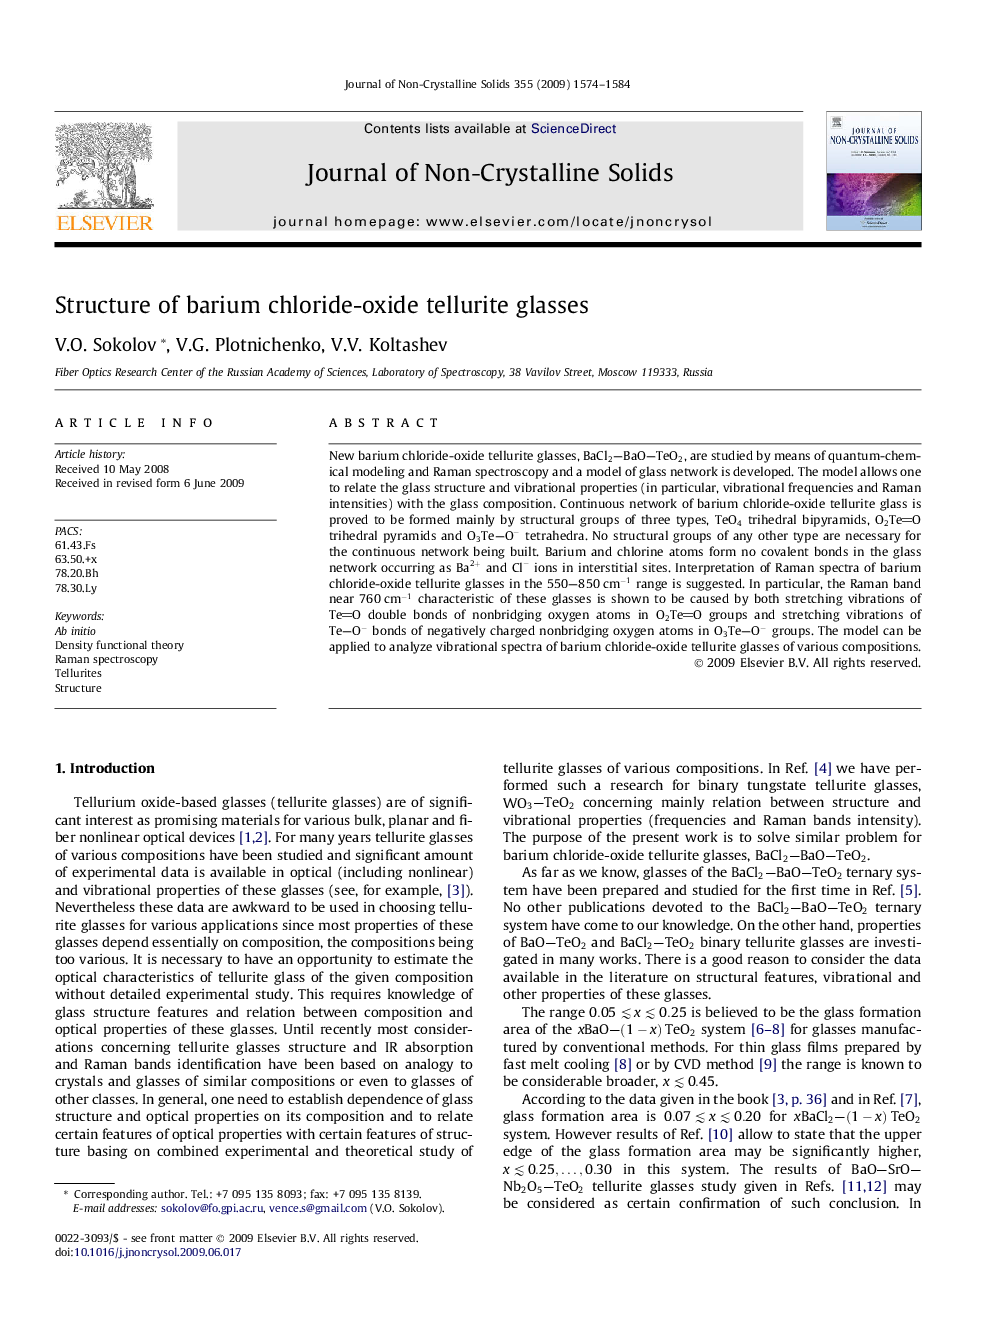 Structure of barium chloride-oxide tellurite glasses